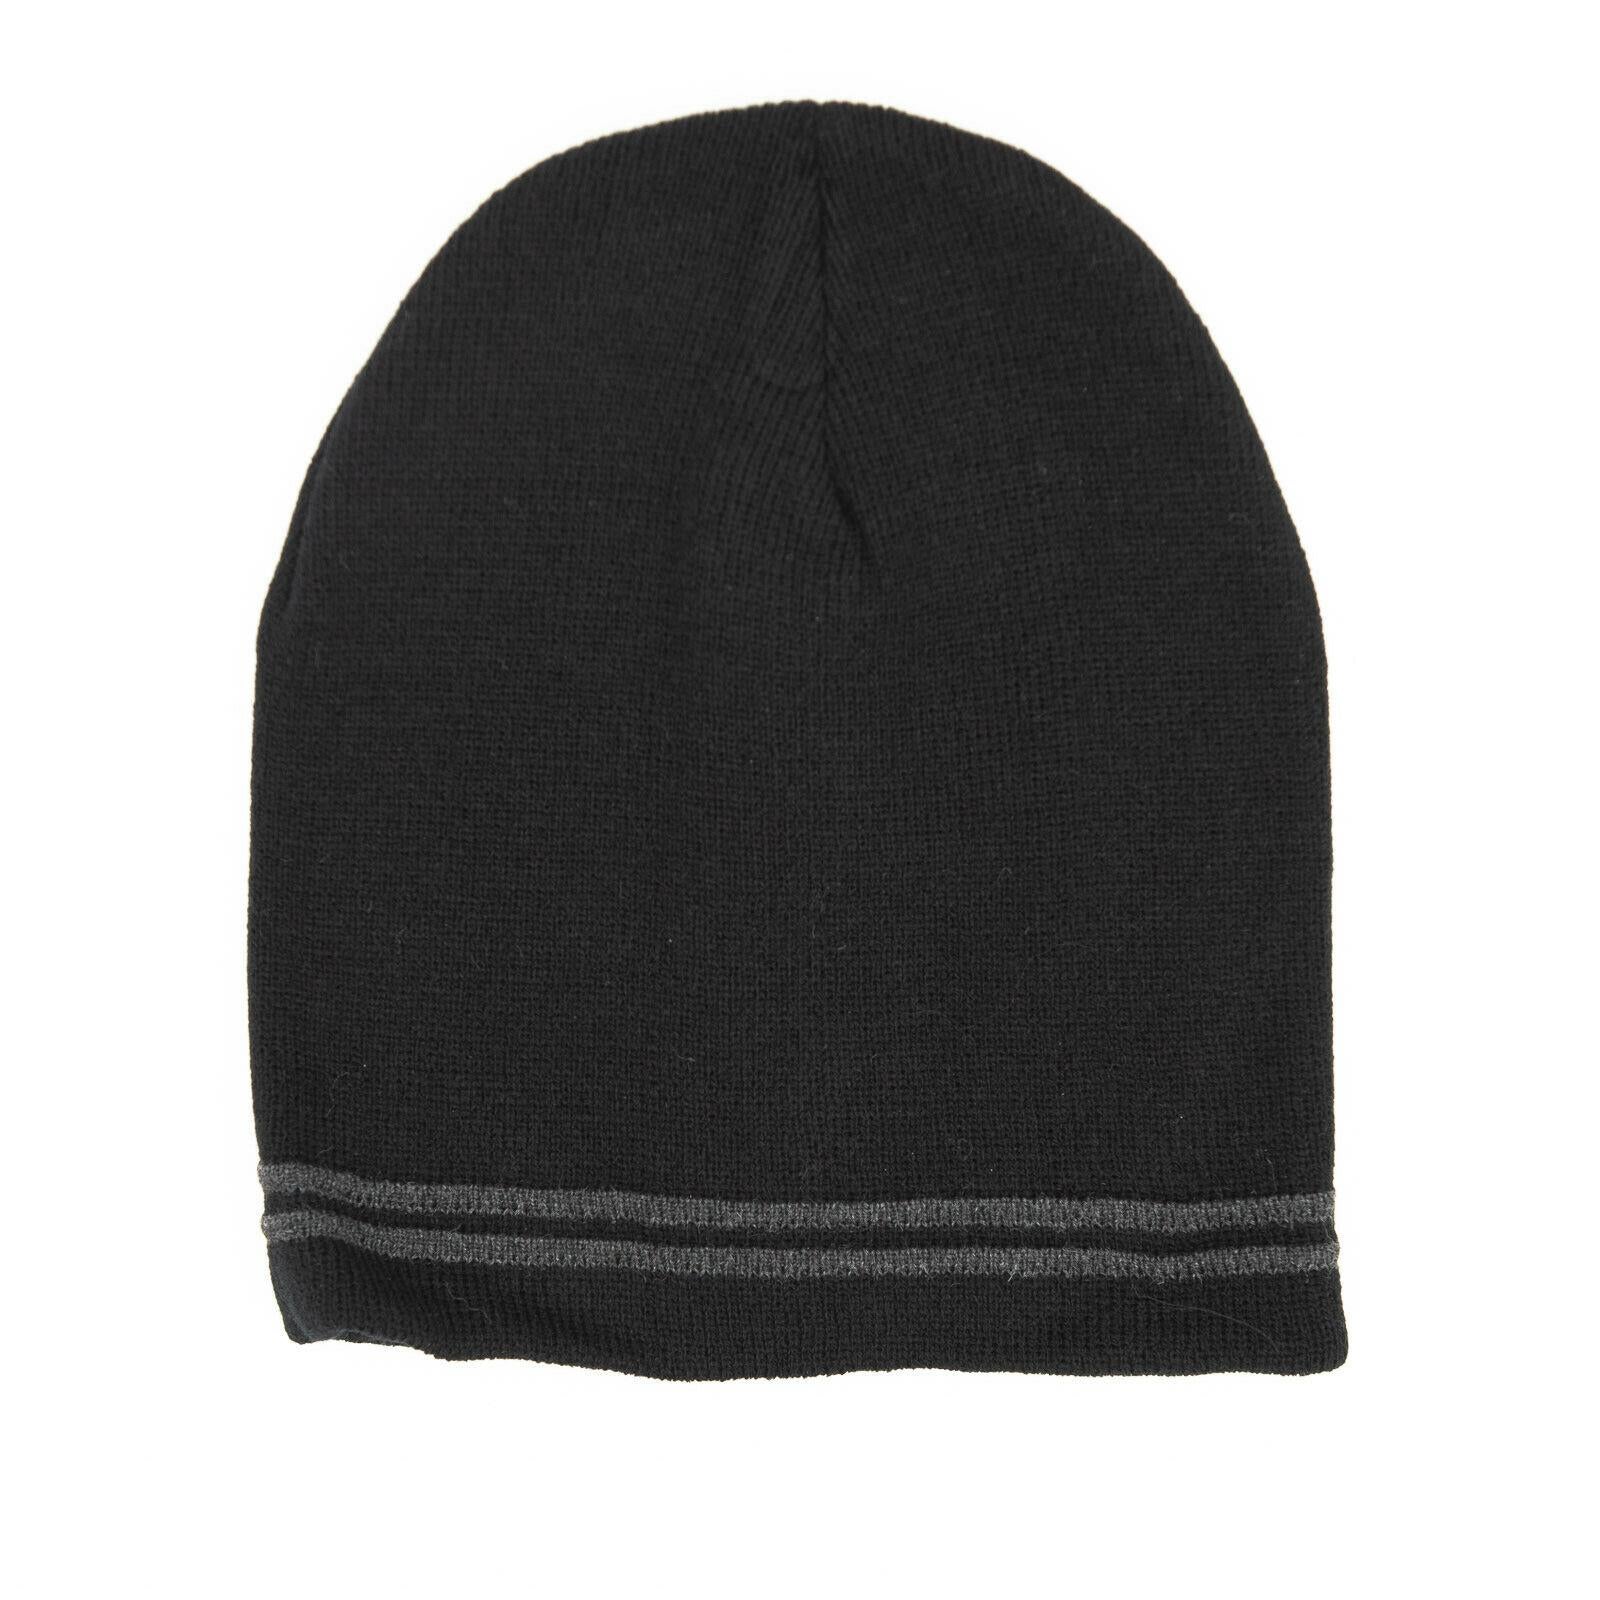 Men Warm Hat Beanie Cap Winter Knit Ski Plain Cuff Mens Slouchy Hats AU Stock - Pantsnsox